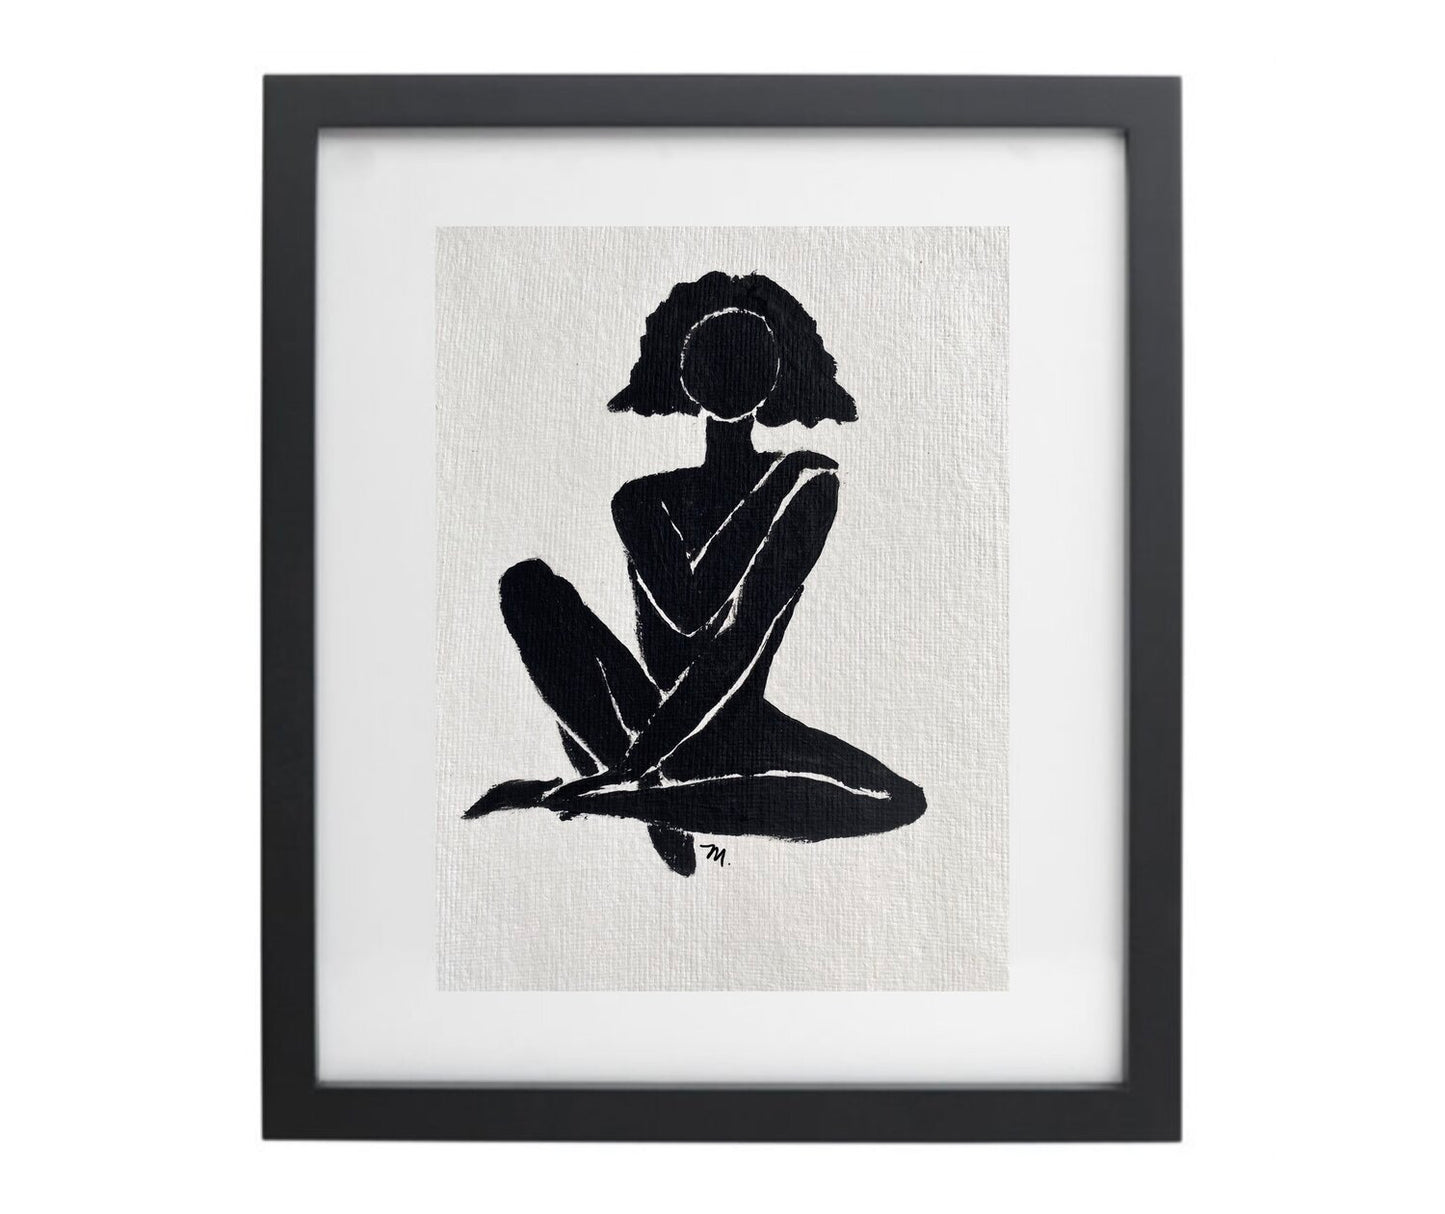 Black and white female figure artwork in a black frame